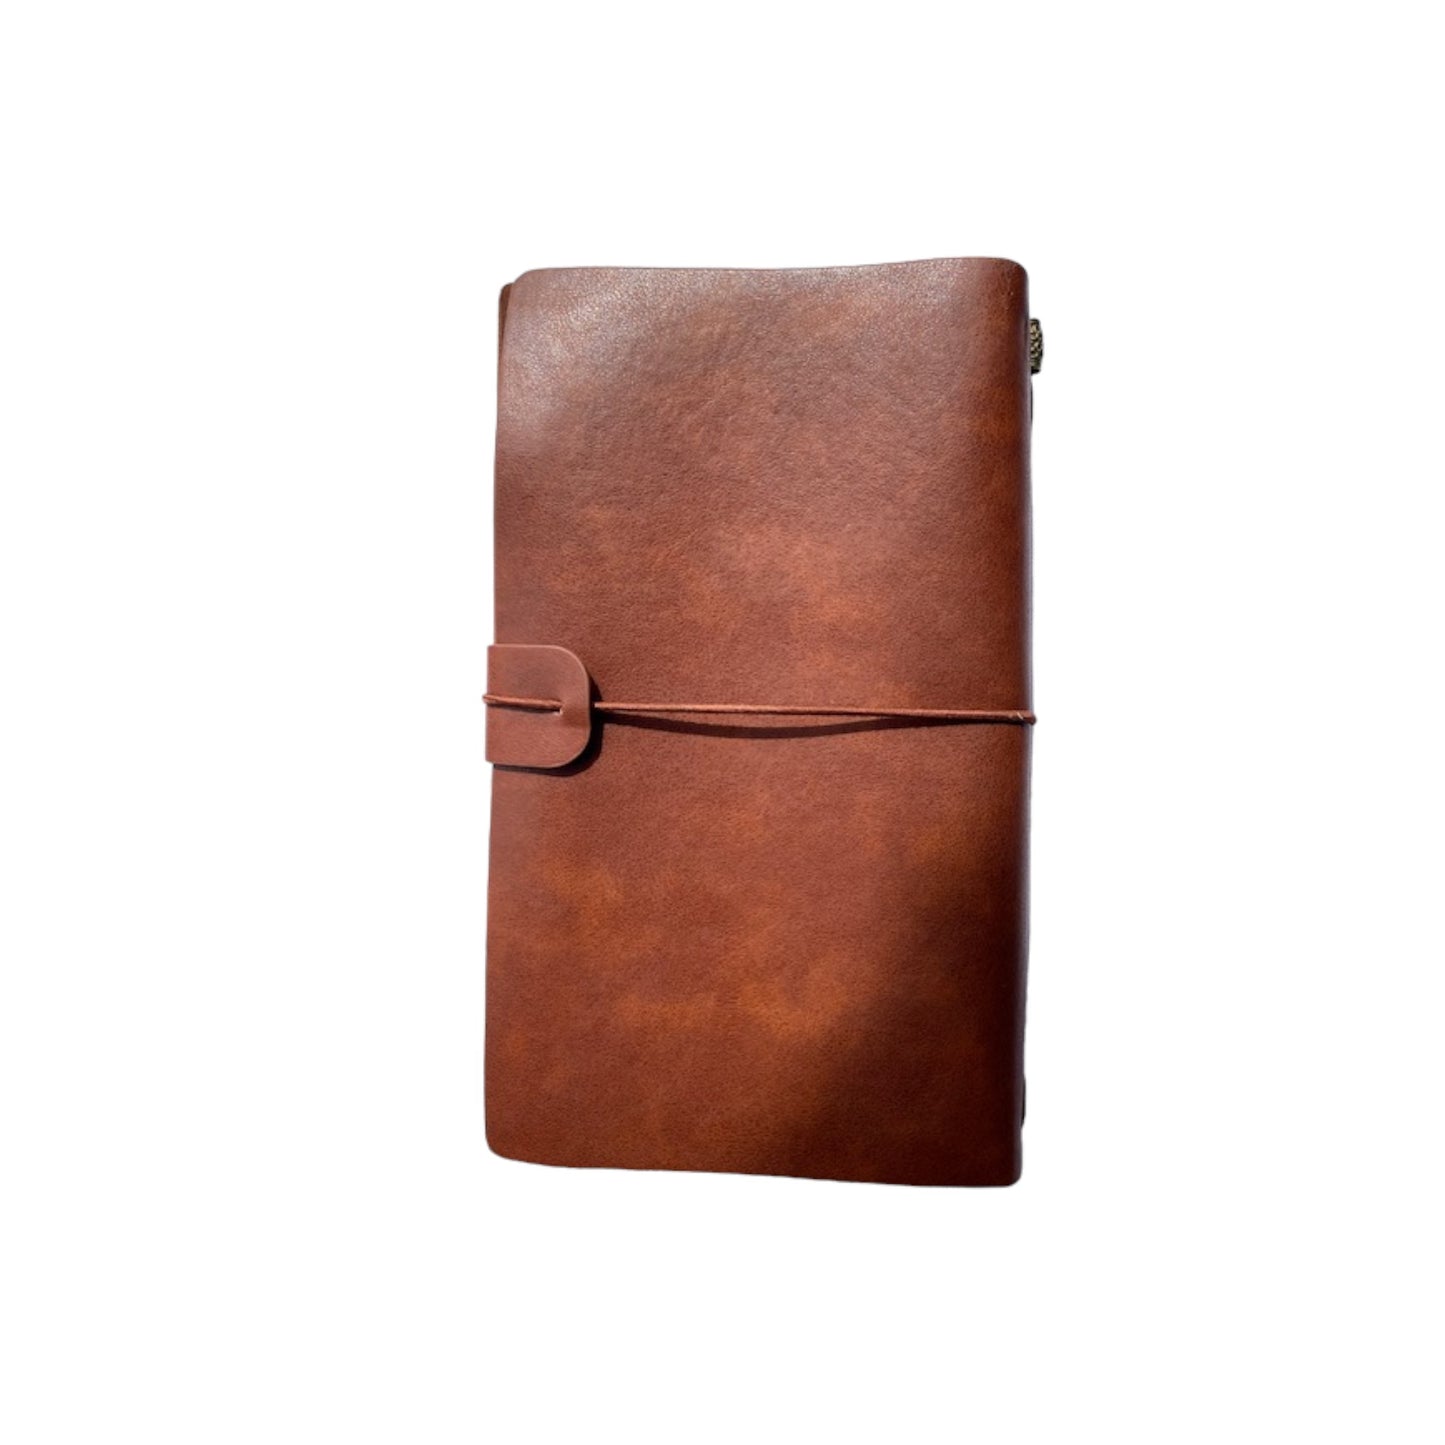 Journal- Sedona Adventure Awaits Engraved leatherette travelers journal